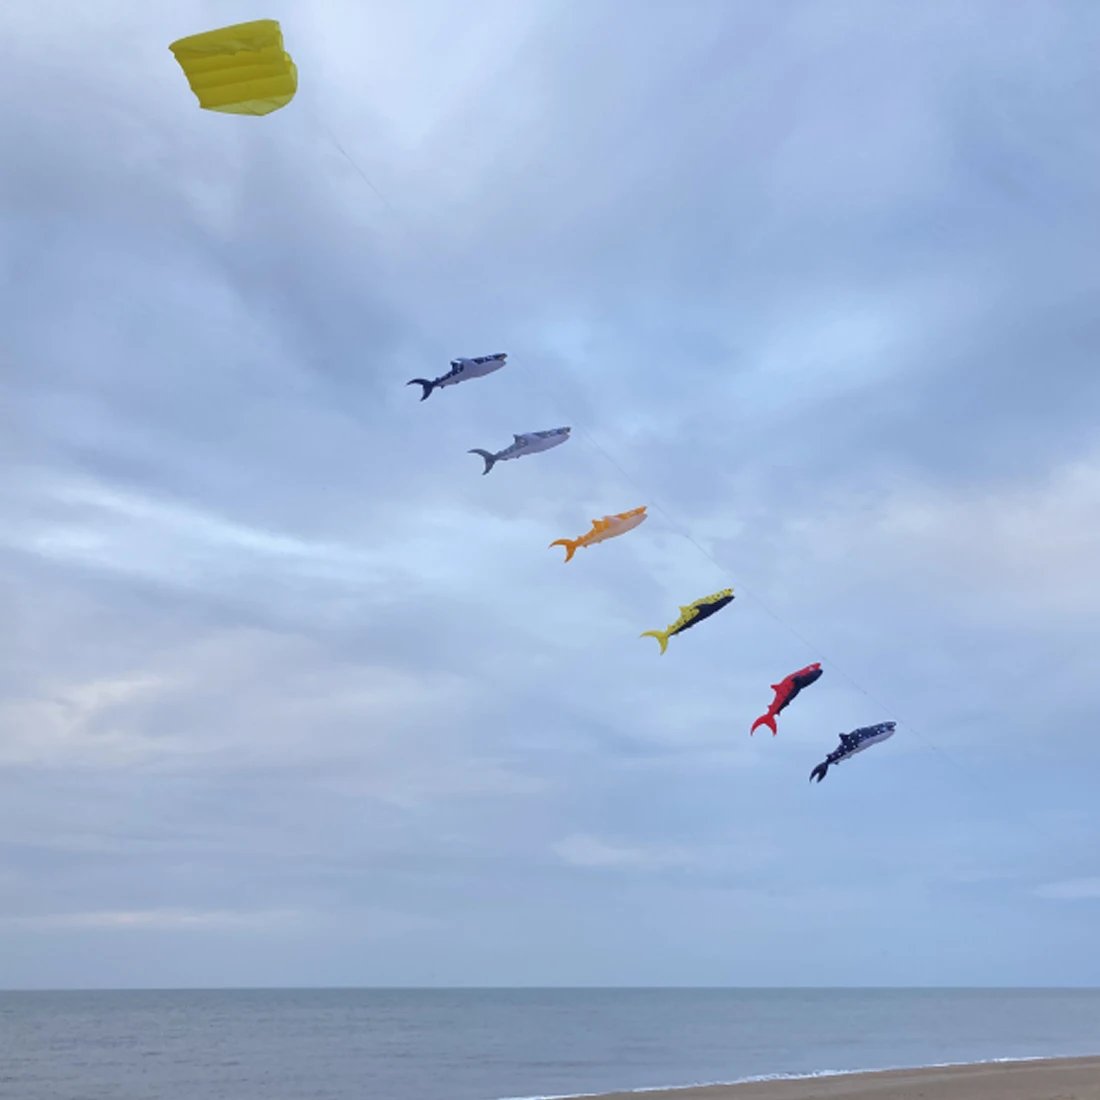 9KM 6m Whale Shark Kite Line Laundry Kite Pendant Soft Inflatable Show Kite for Kite Festival 30D Ripstop Nylon with Bag